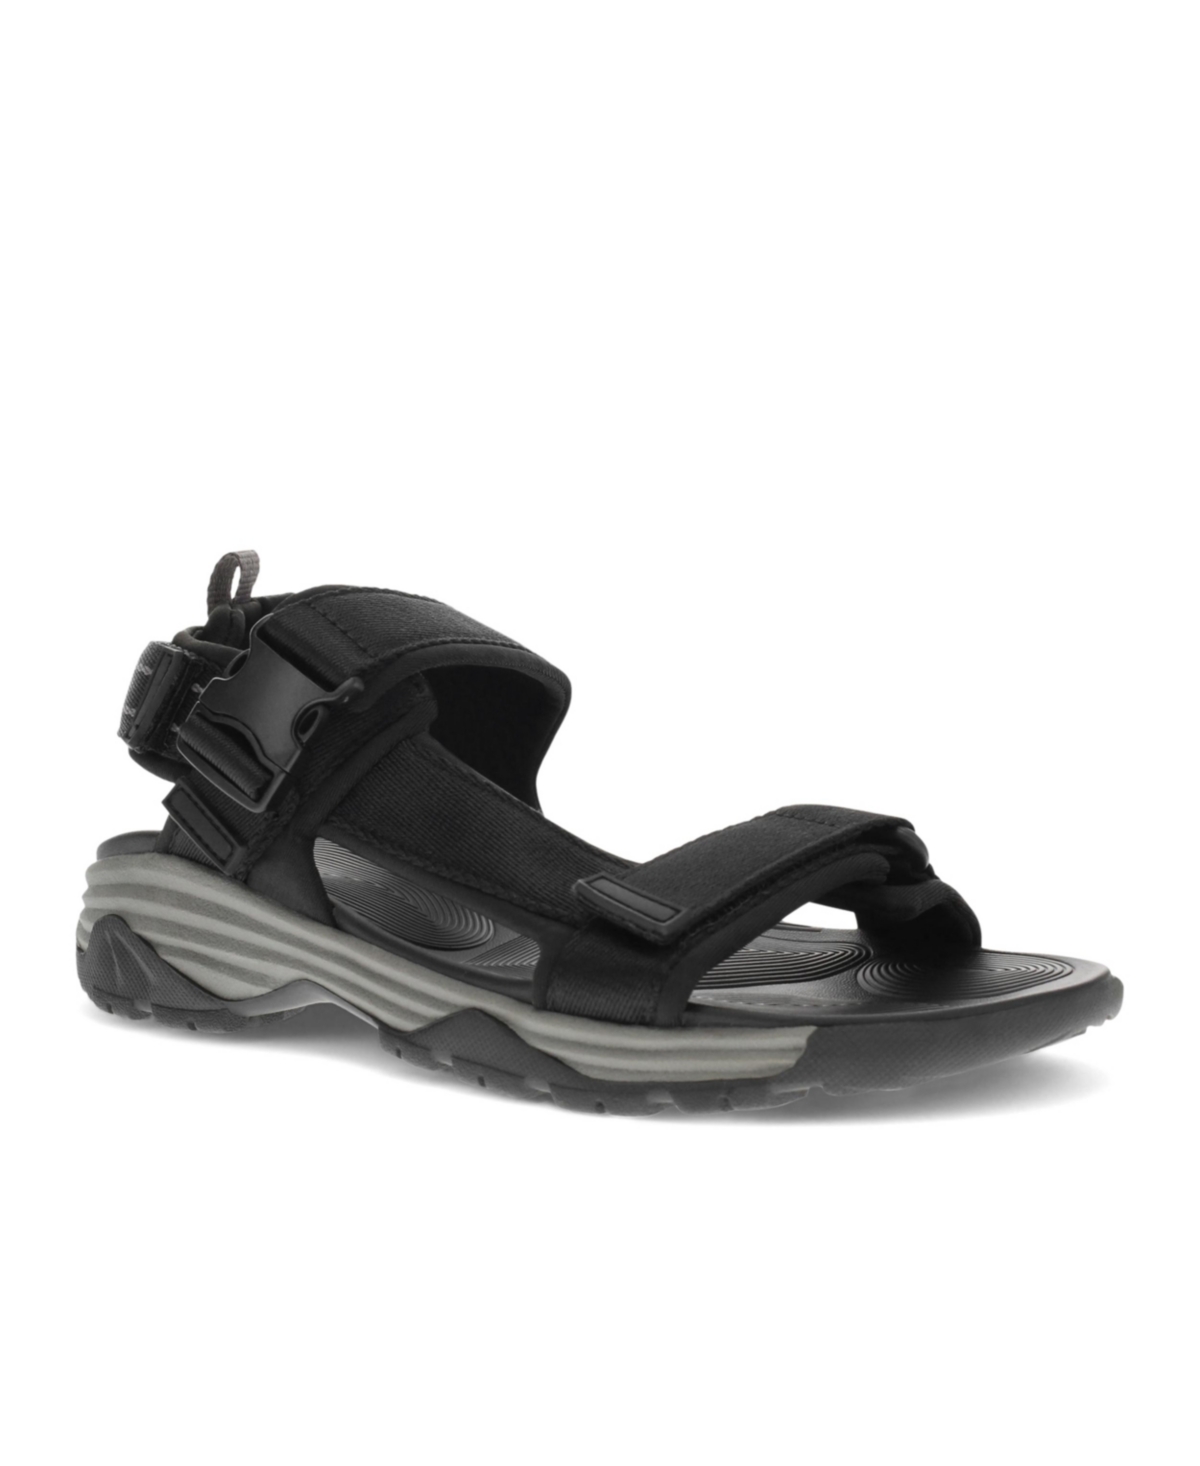 Men's Bradley Sport Sandals - Black